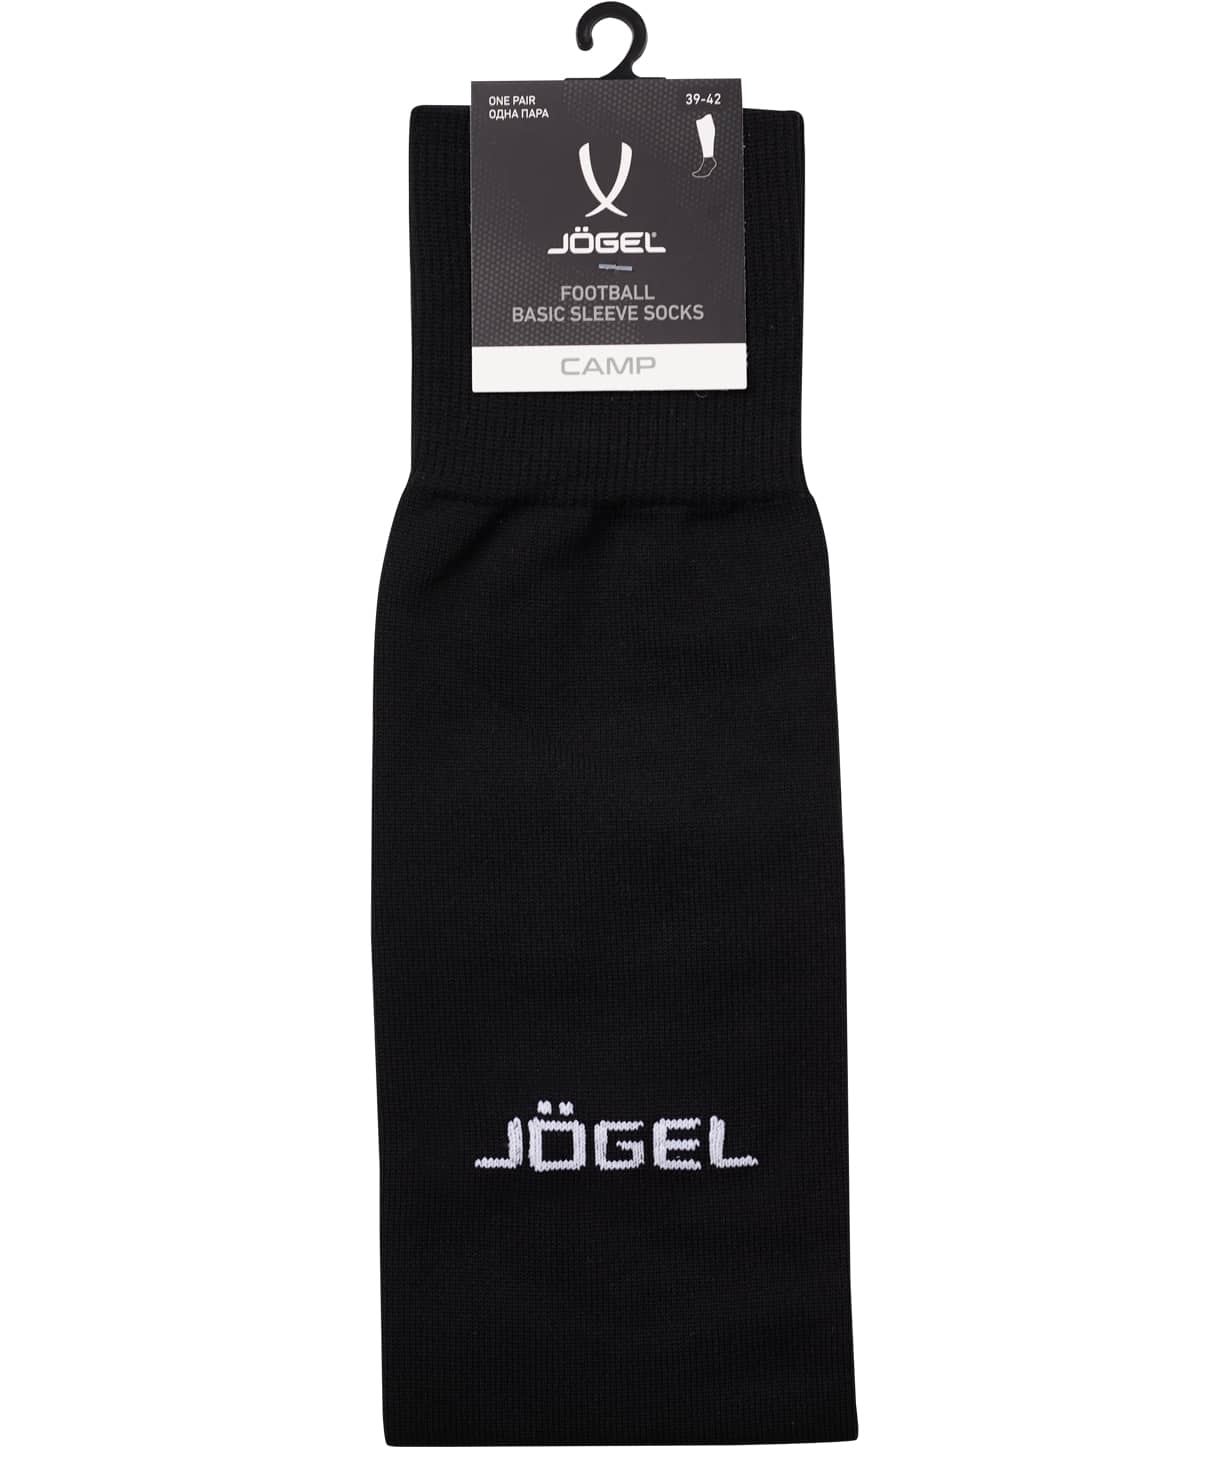 фото Jogel camp basic sleeve socks гольфы футбольные черные Football-54 